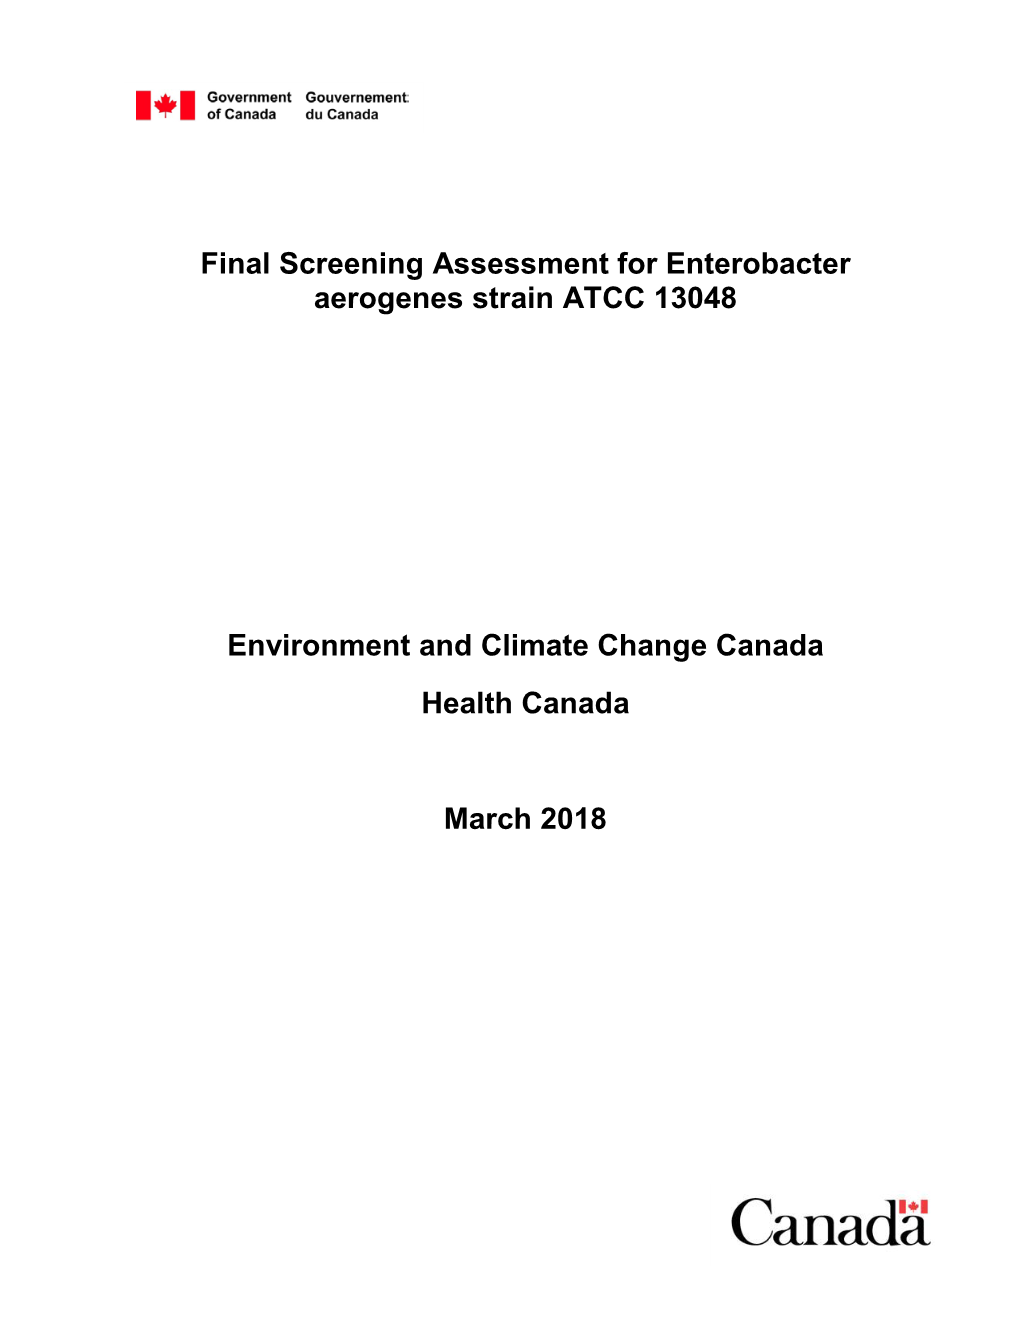 Environment Canada and Health Canada 2011)